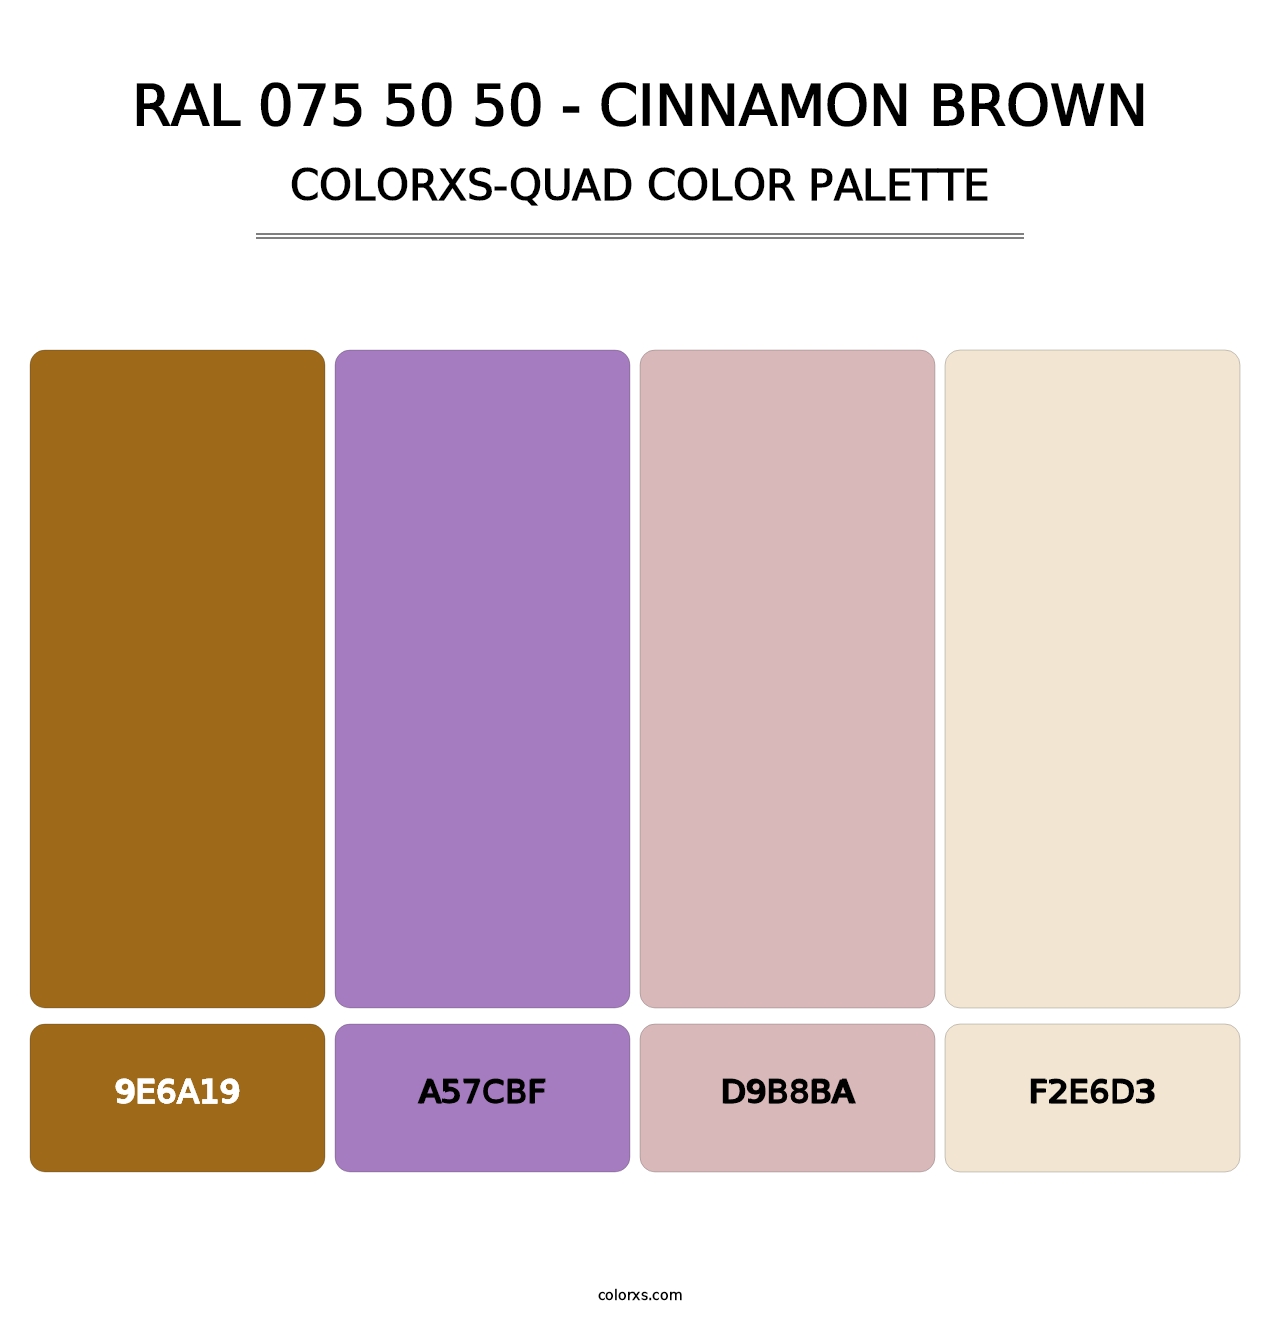 RAL 075 50 50 - Cinnamon Brown - Colorxs Quad Palette